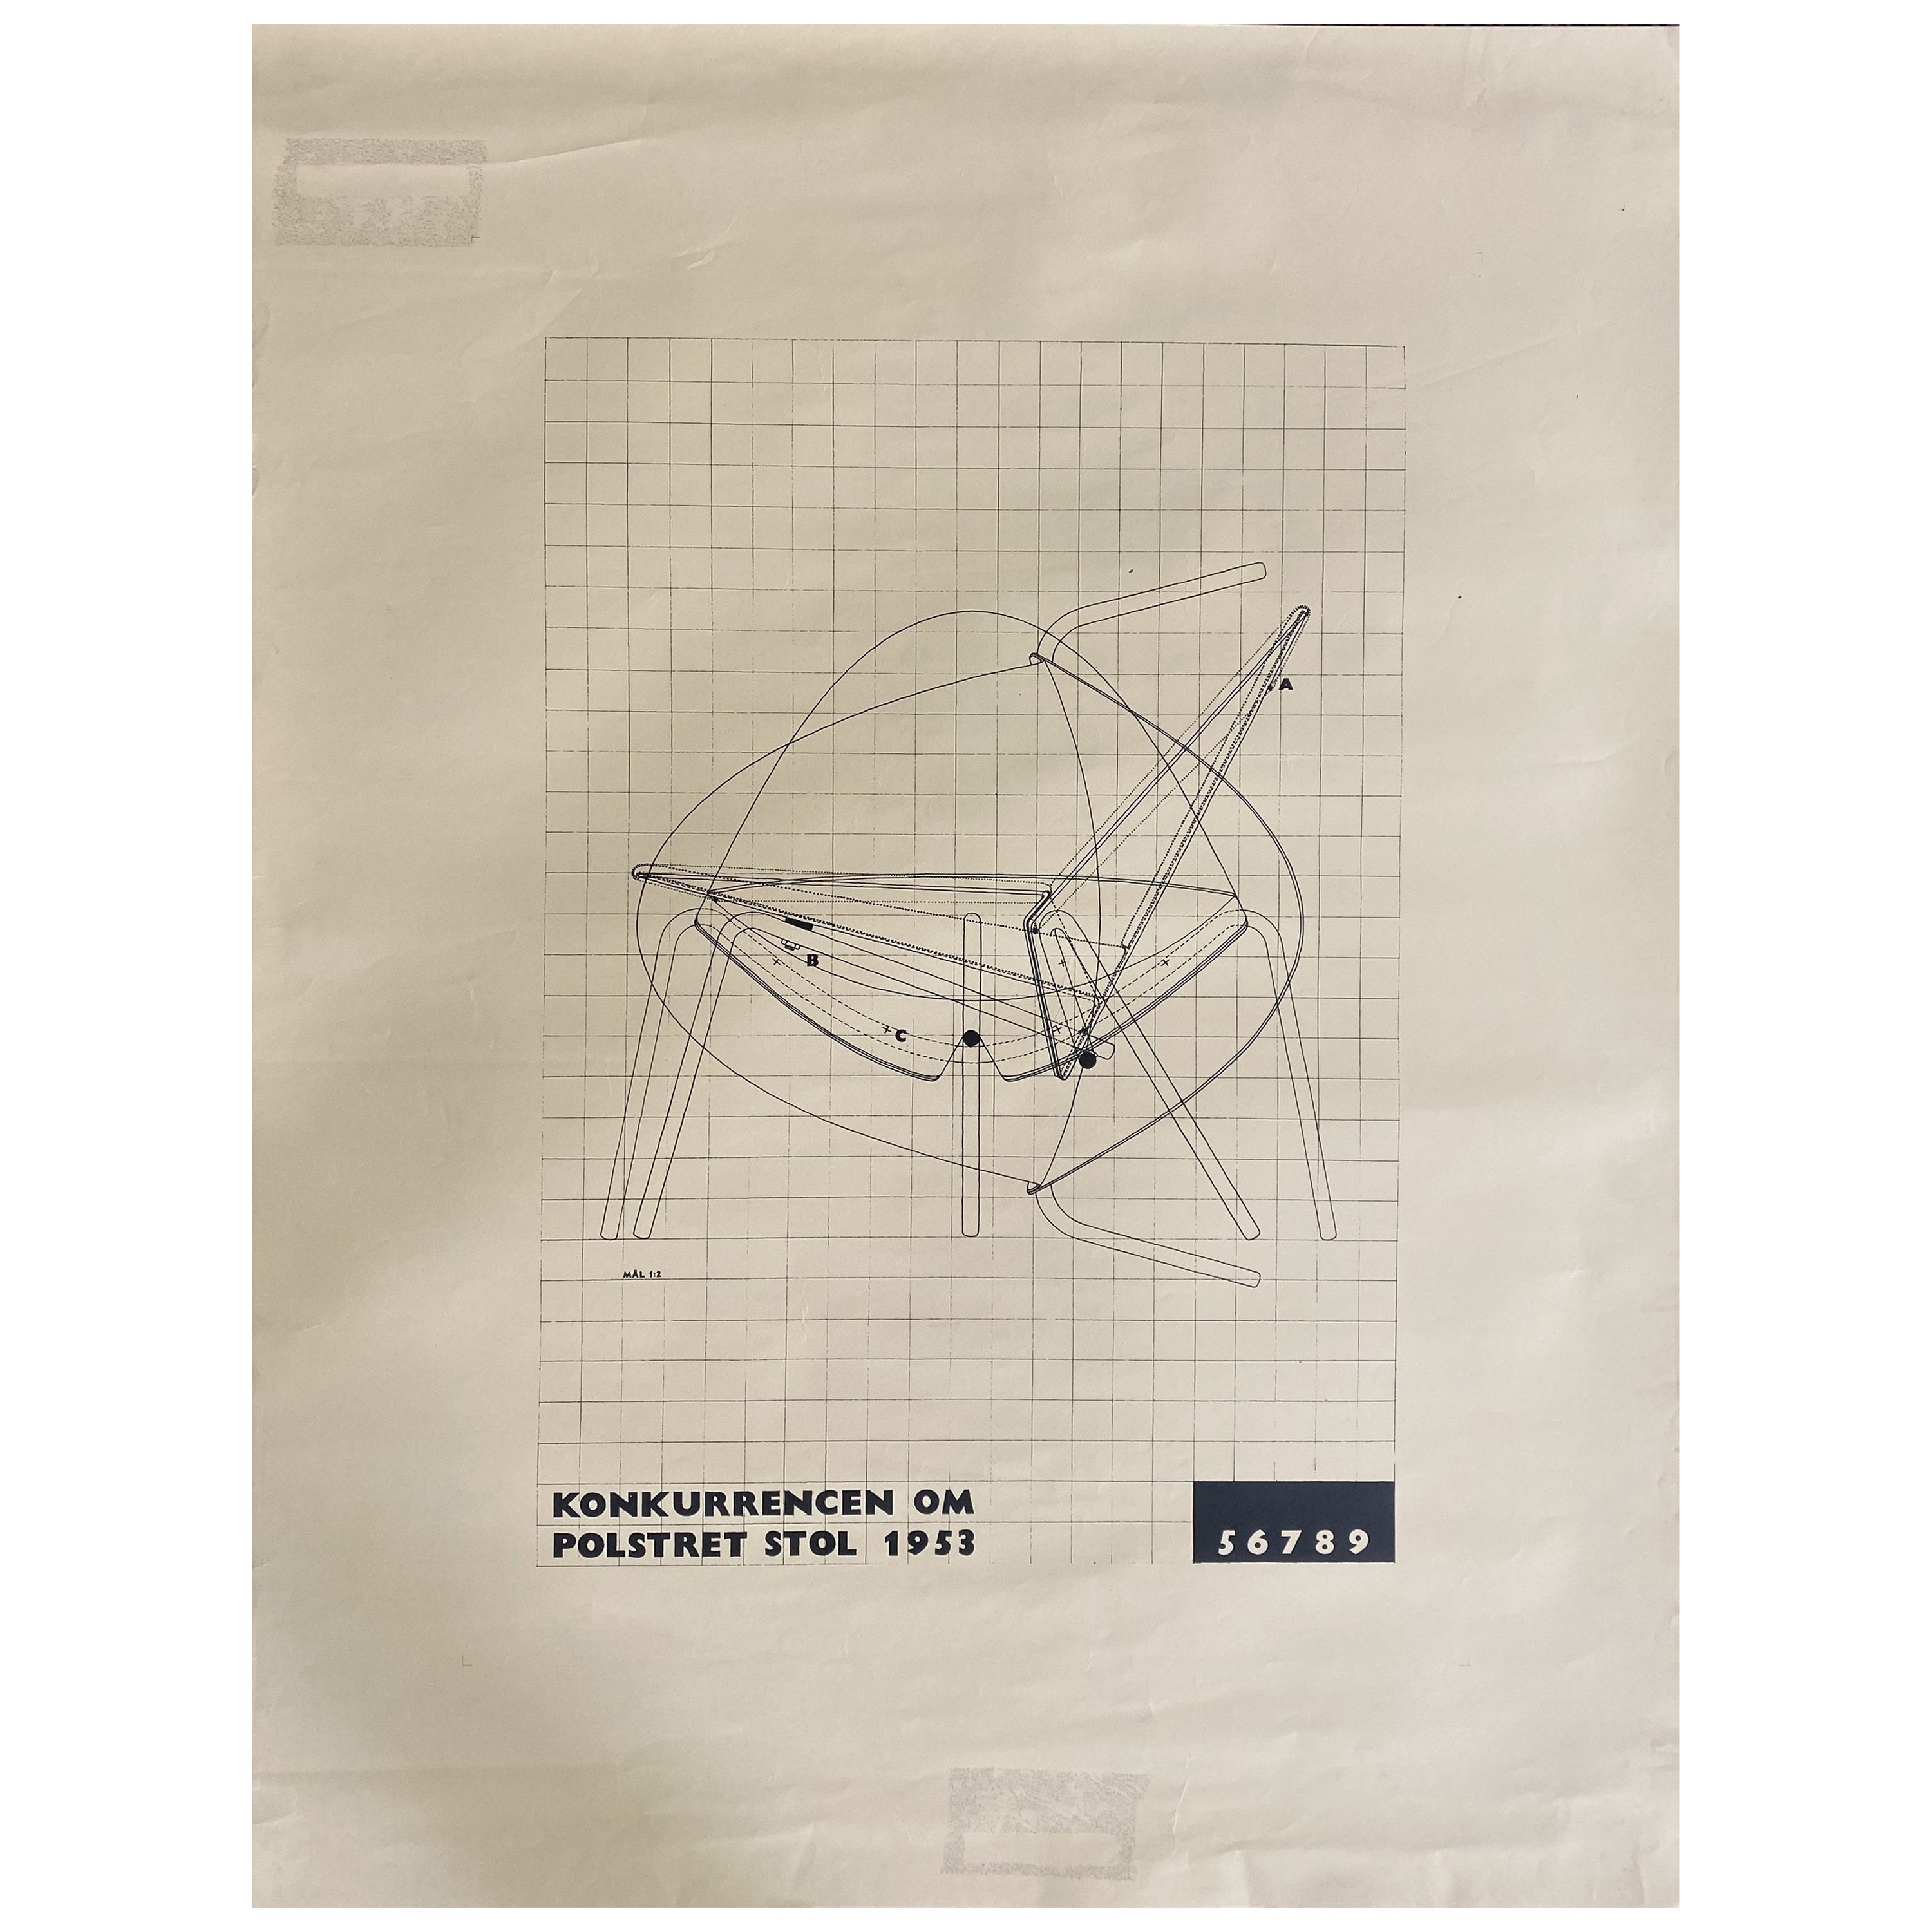 Poul Kjaerholm Aluminium Chair Competetition drawing poster 1953 Danish Design  For Sale